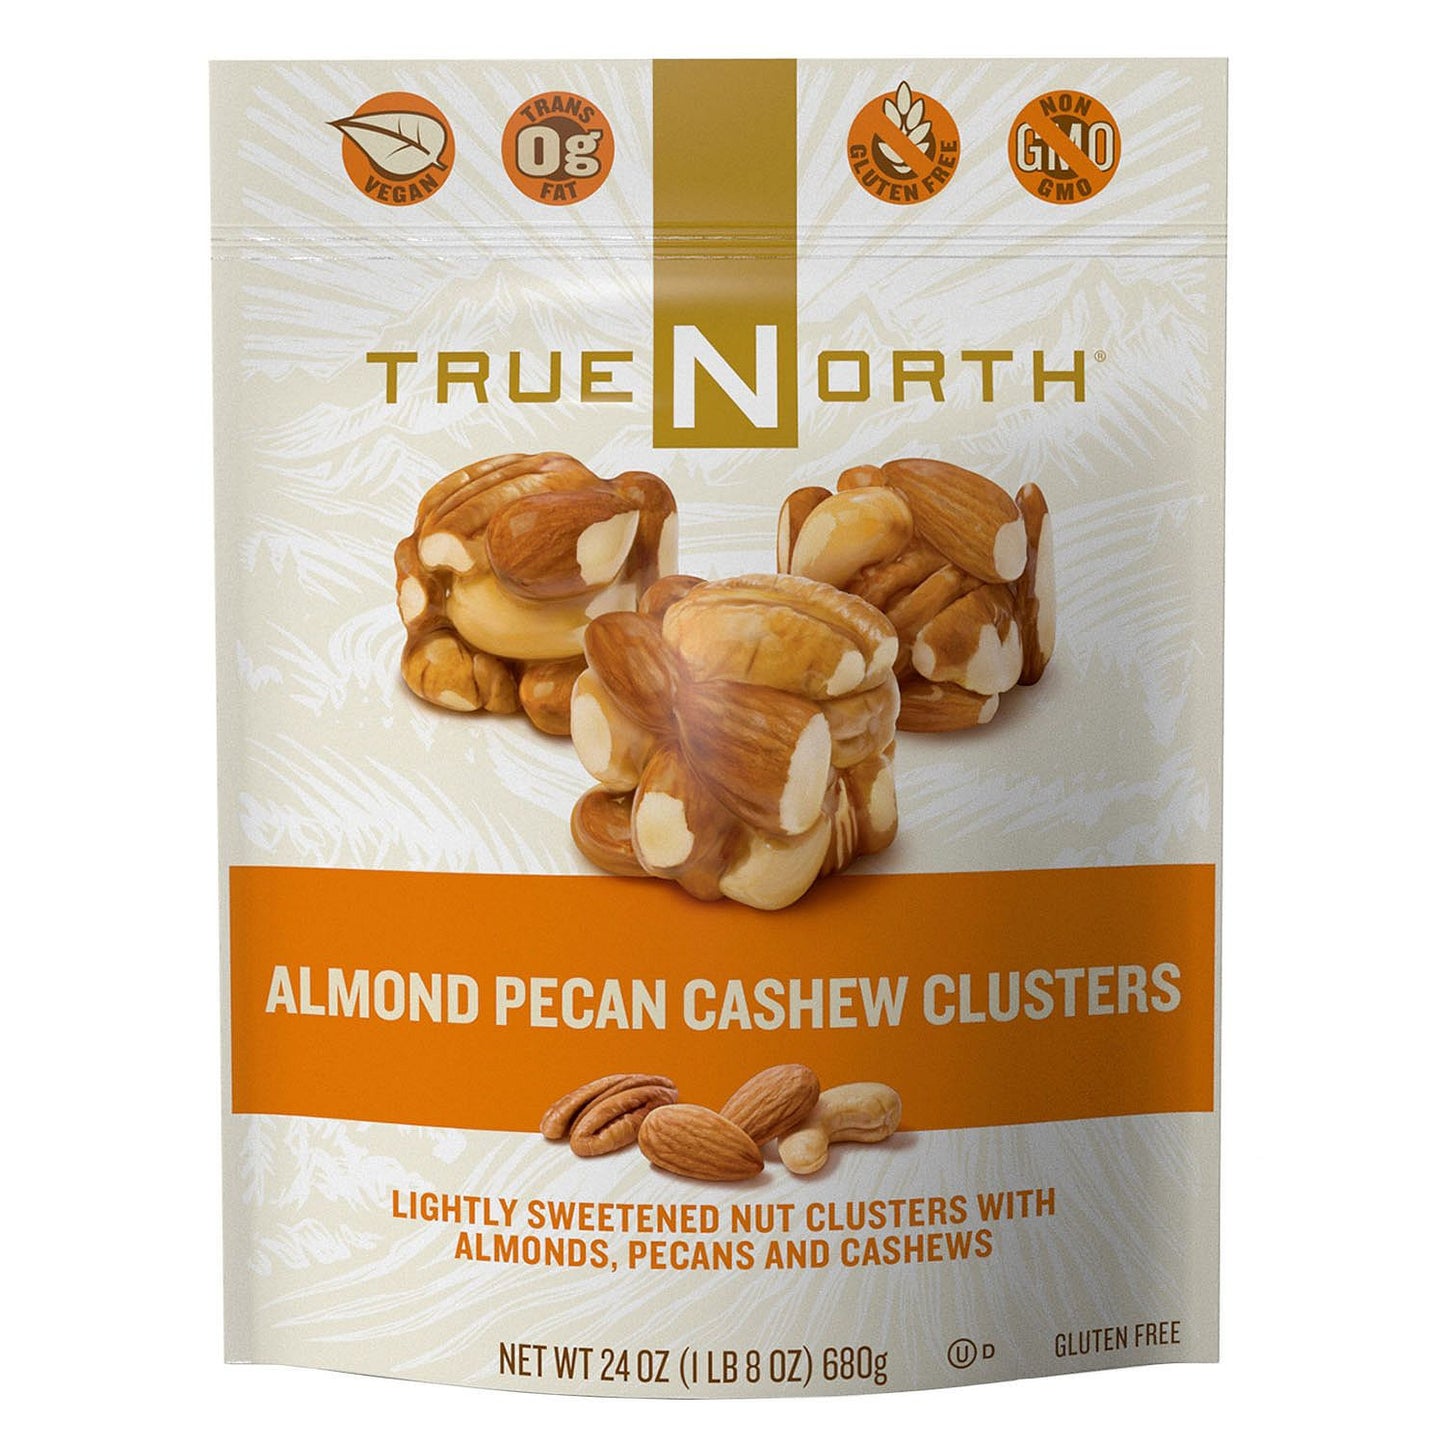 True North Almond Pecan Cashew Clusters - 24 oz.